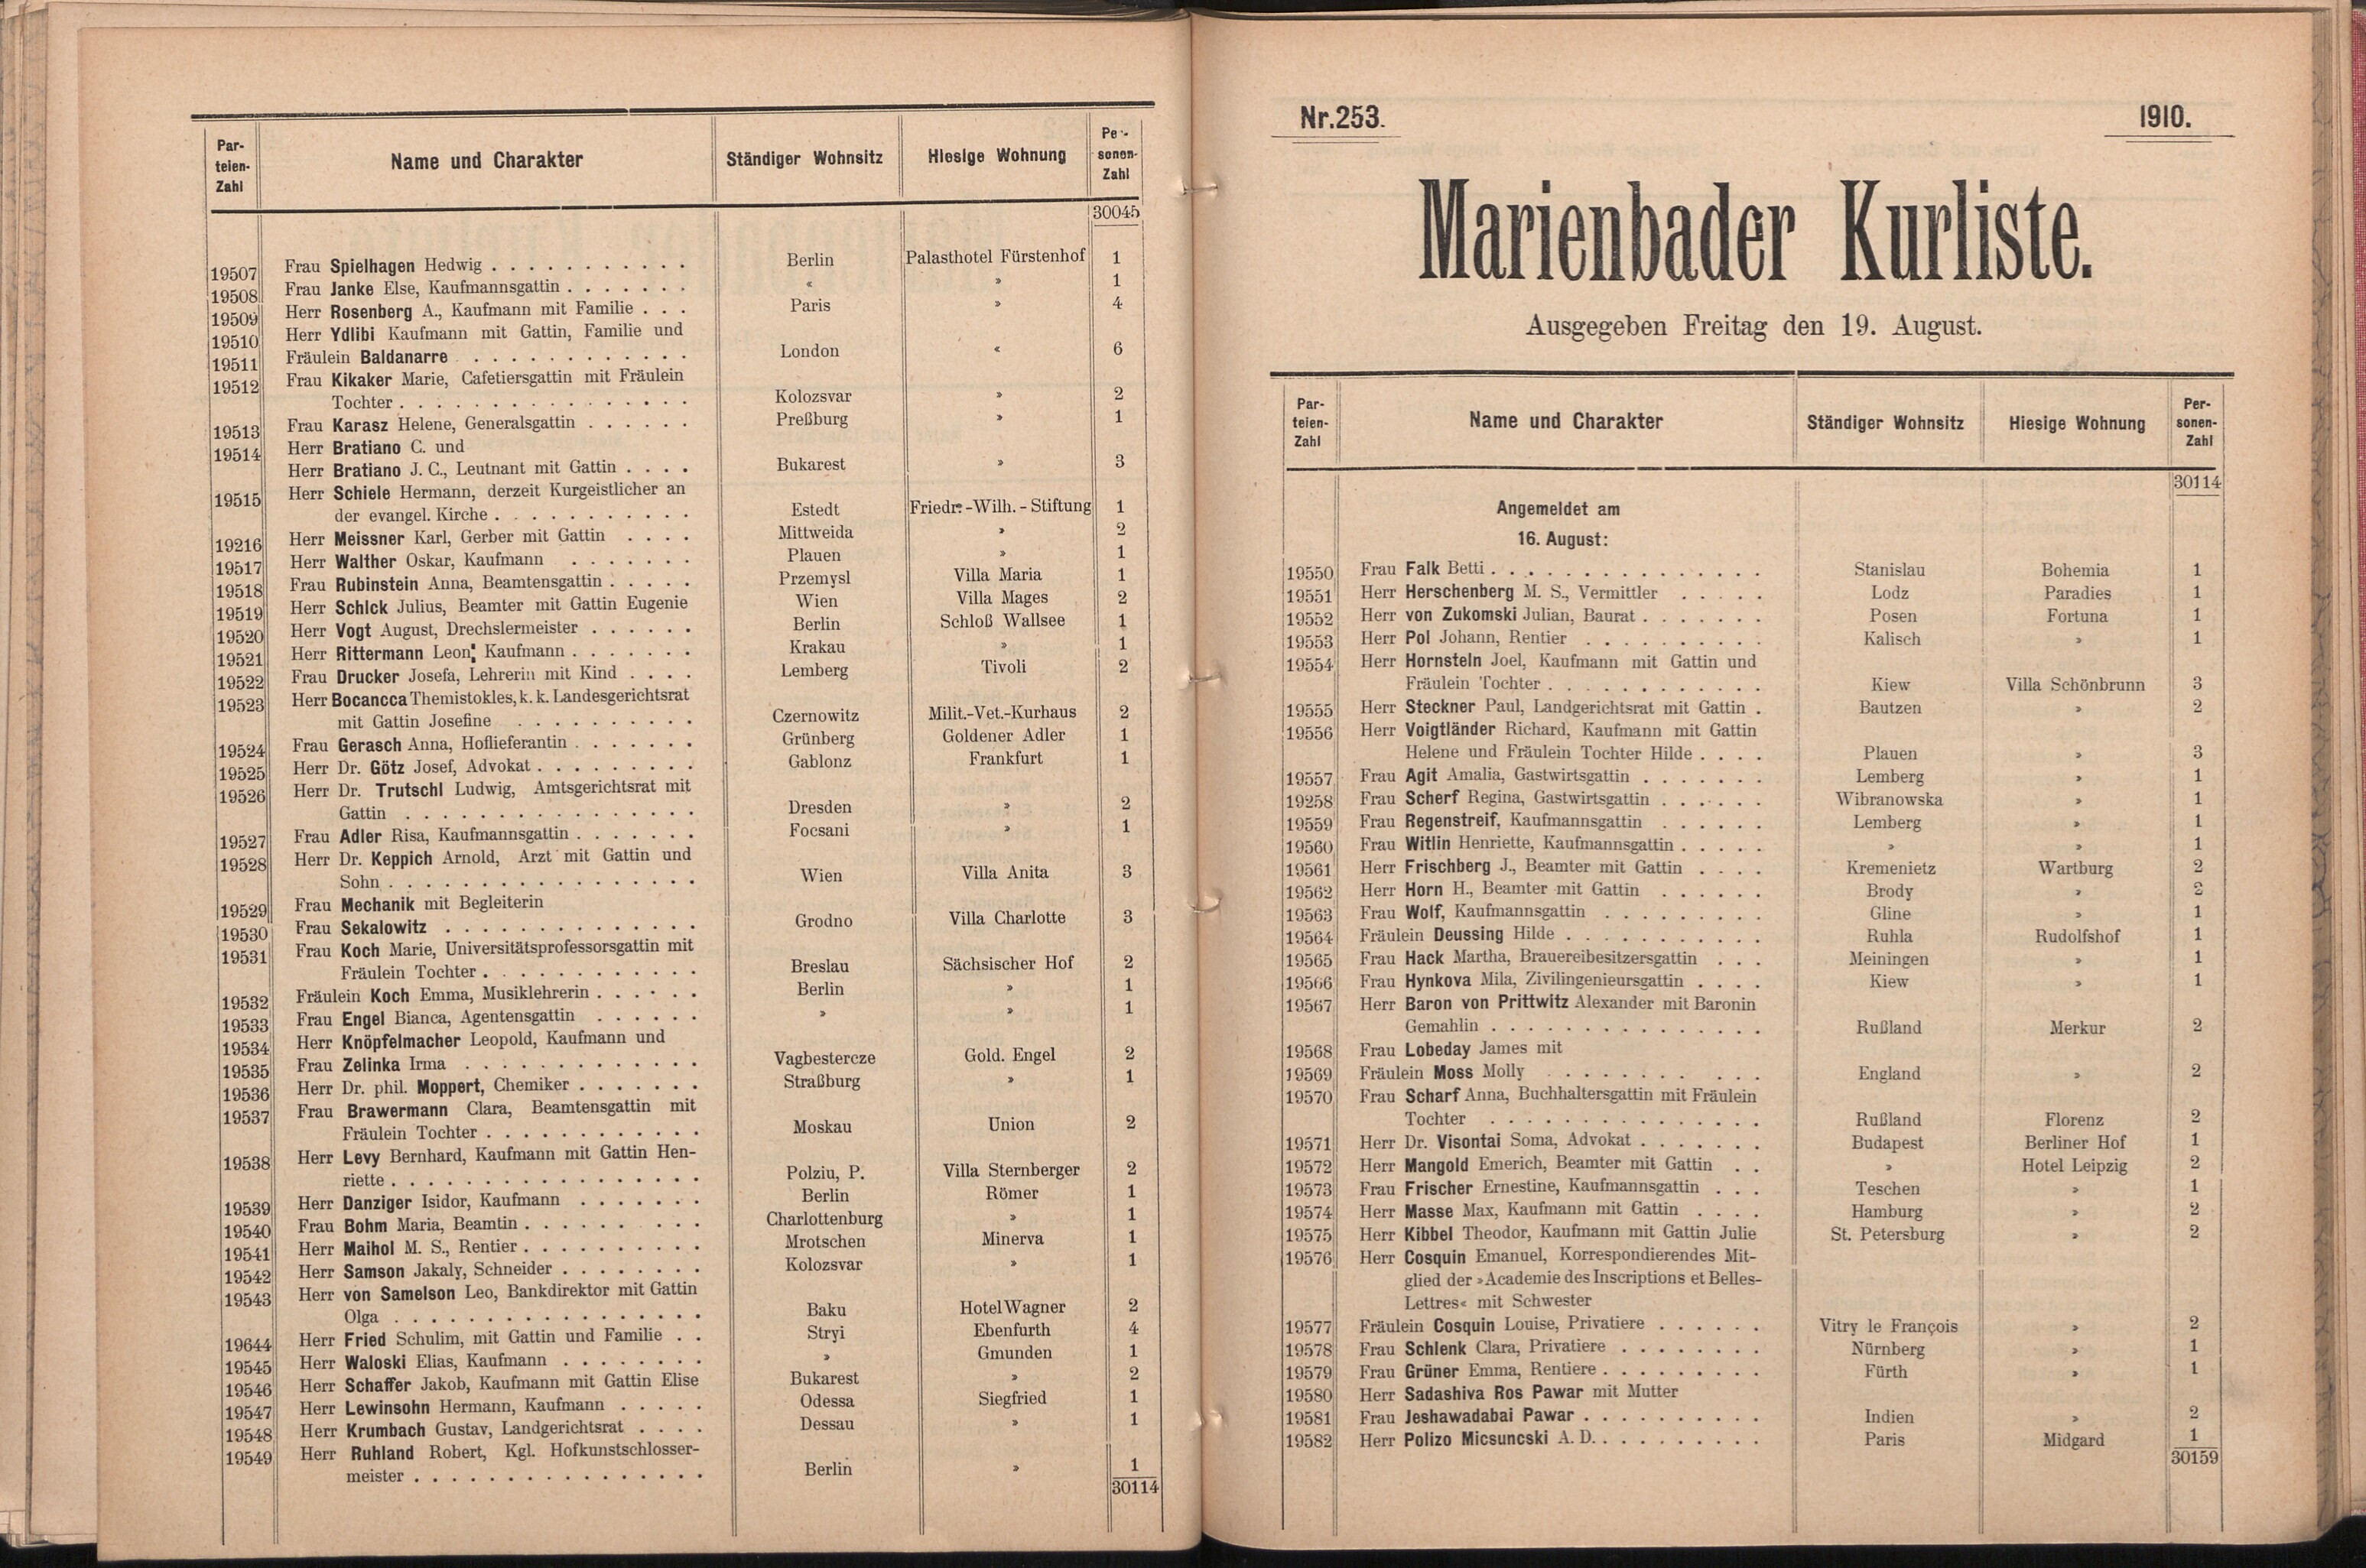 386. soap-ch_knihovna_marienbader-kurliste-1910_3860